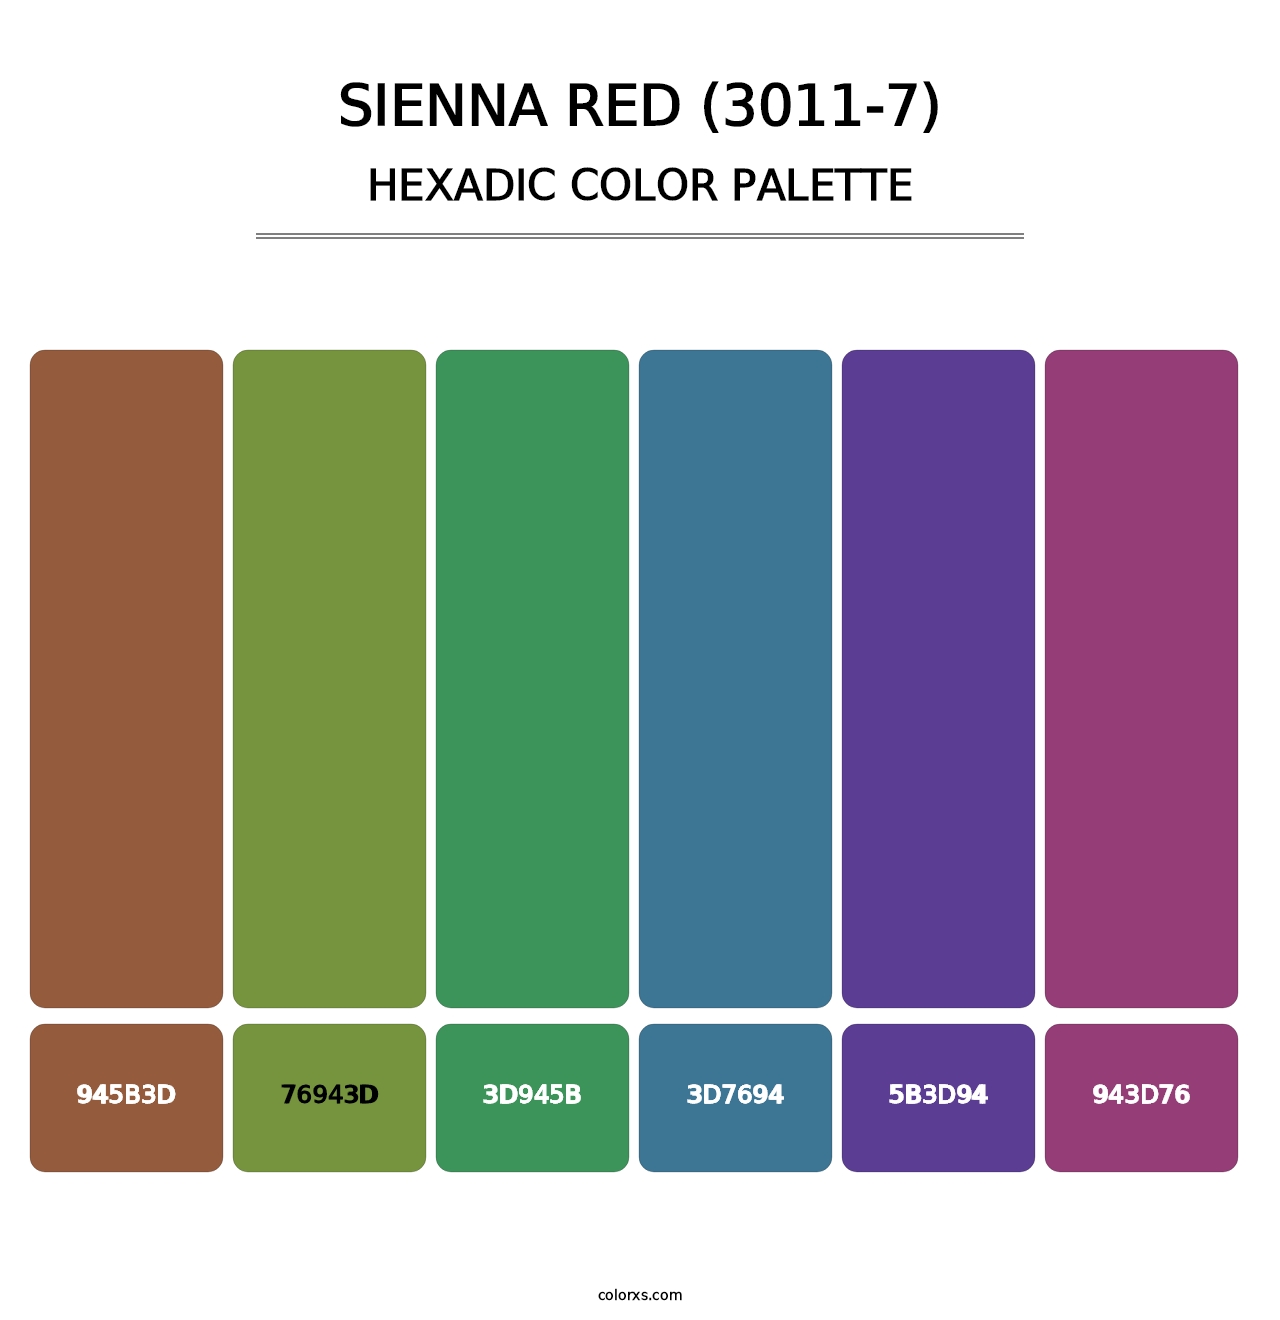 Sienna Red (3011-7) - Hexadic Color Palette